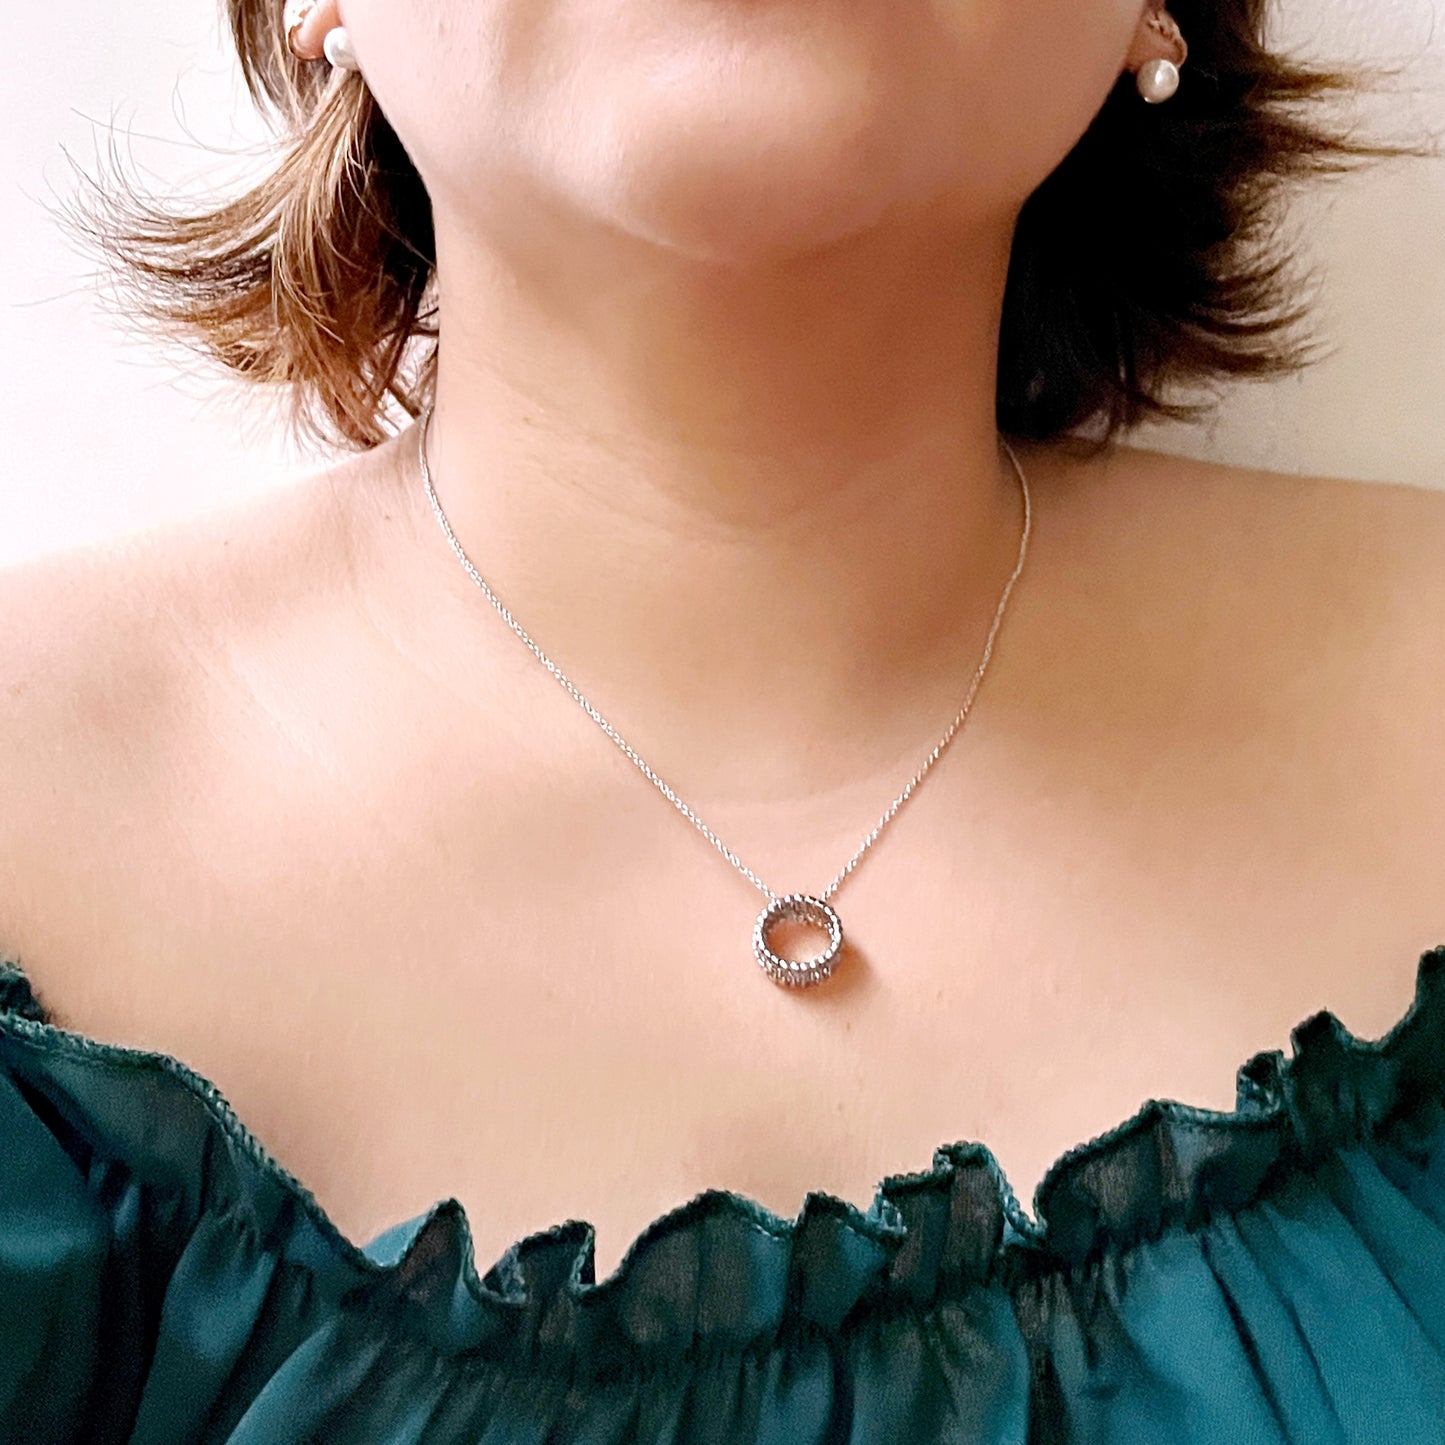 Little Ring Pendant Necklace